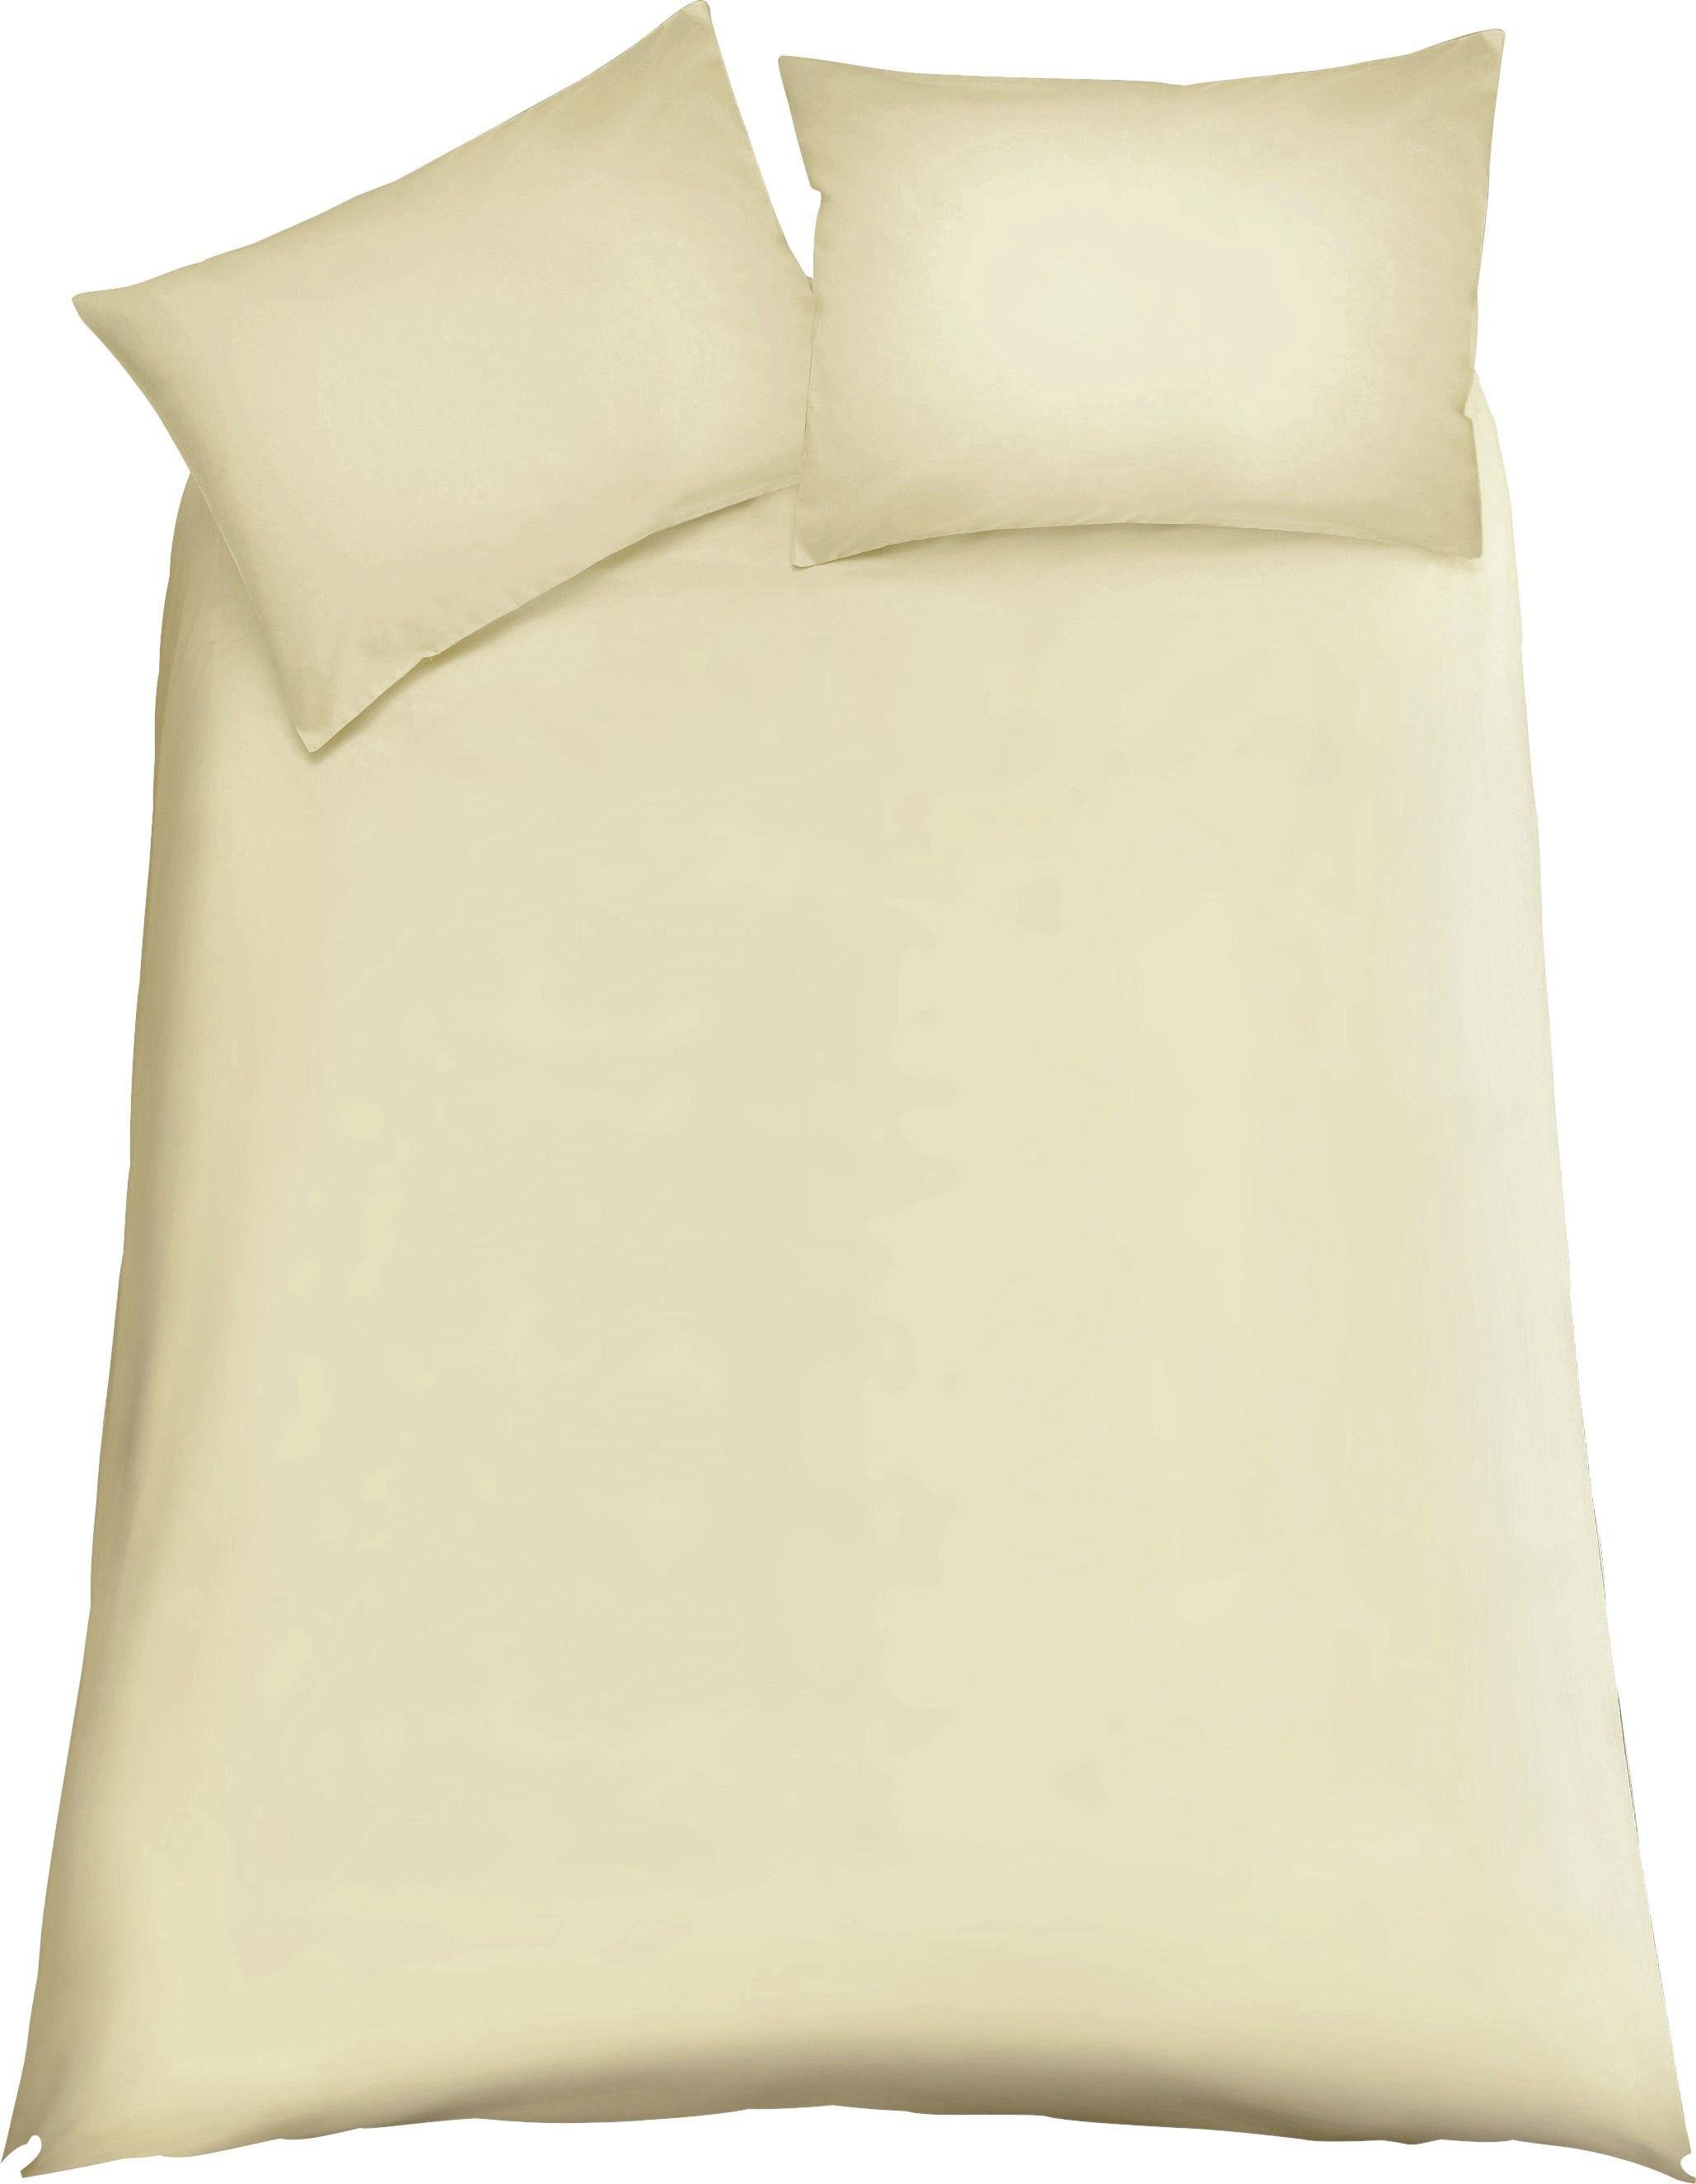 Argos Home Cotton Cream Bedding Set - Superking